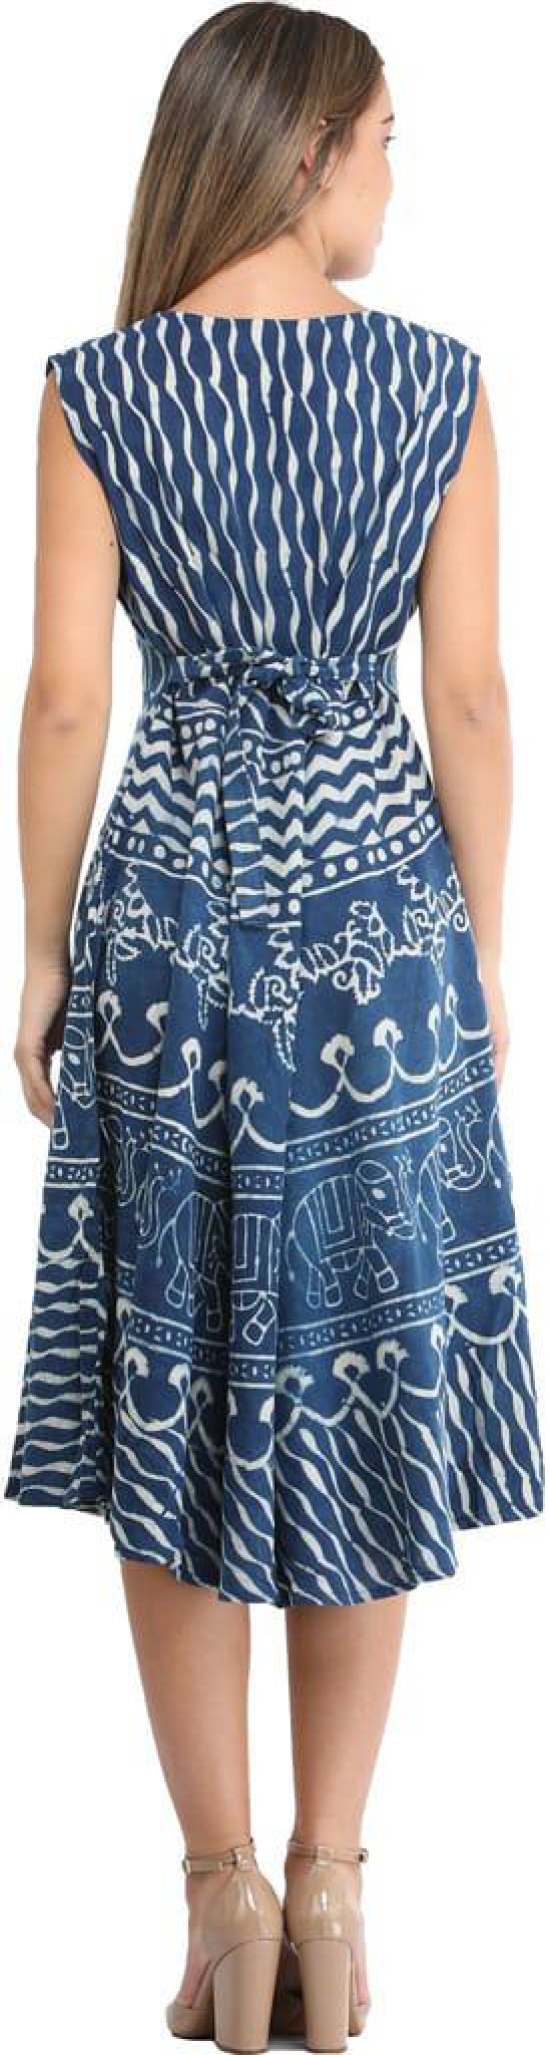 Twilight-Blue Summer Dress with Block-Printed Elephants and Dori on Back